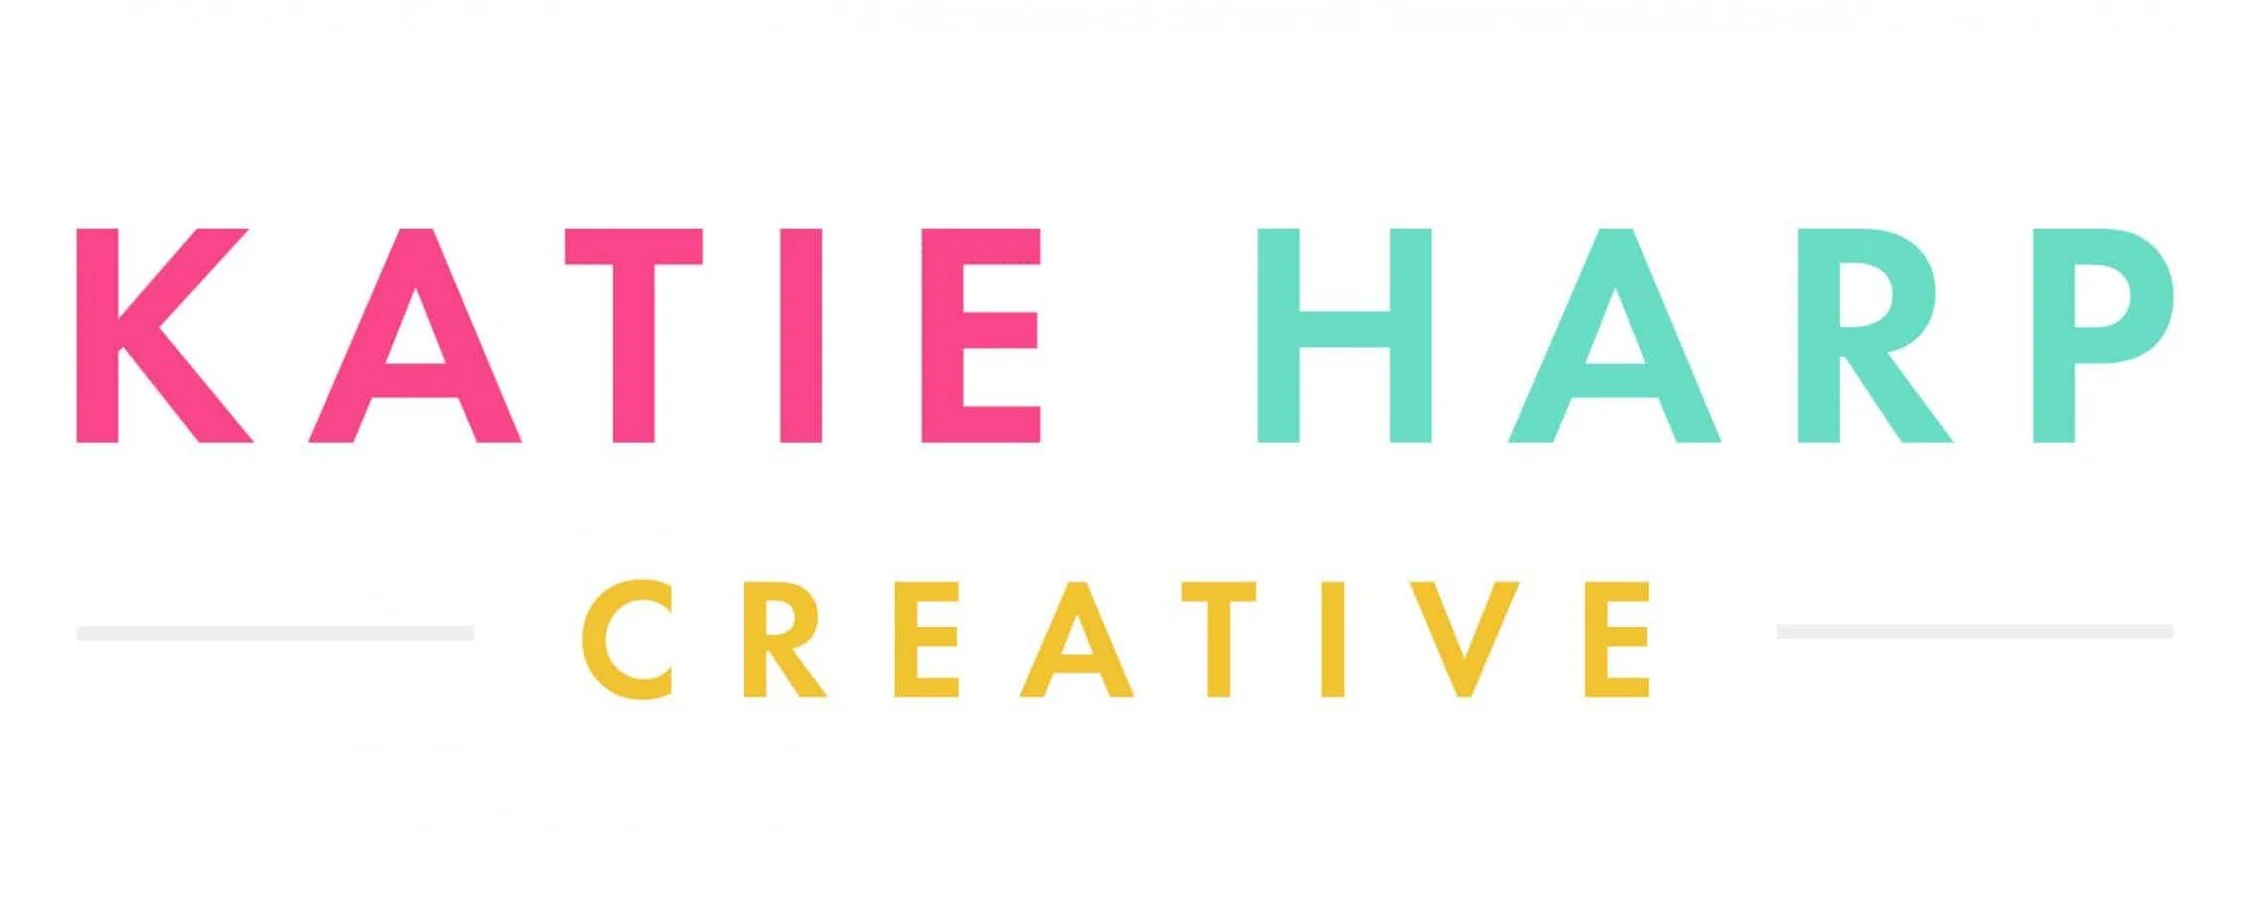 Katie Harp Creative logo